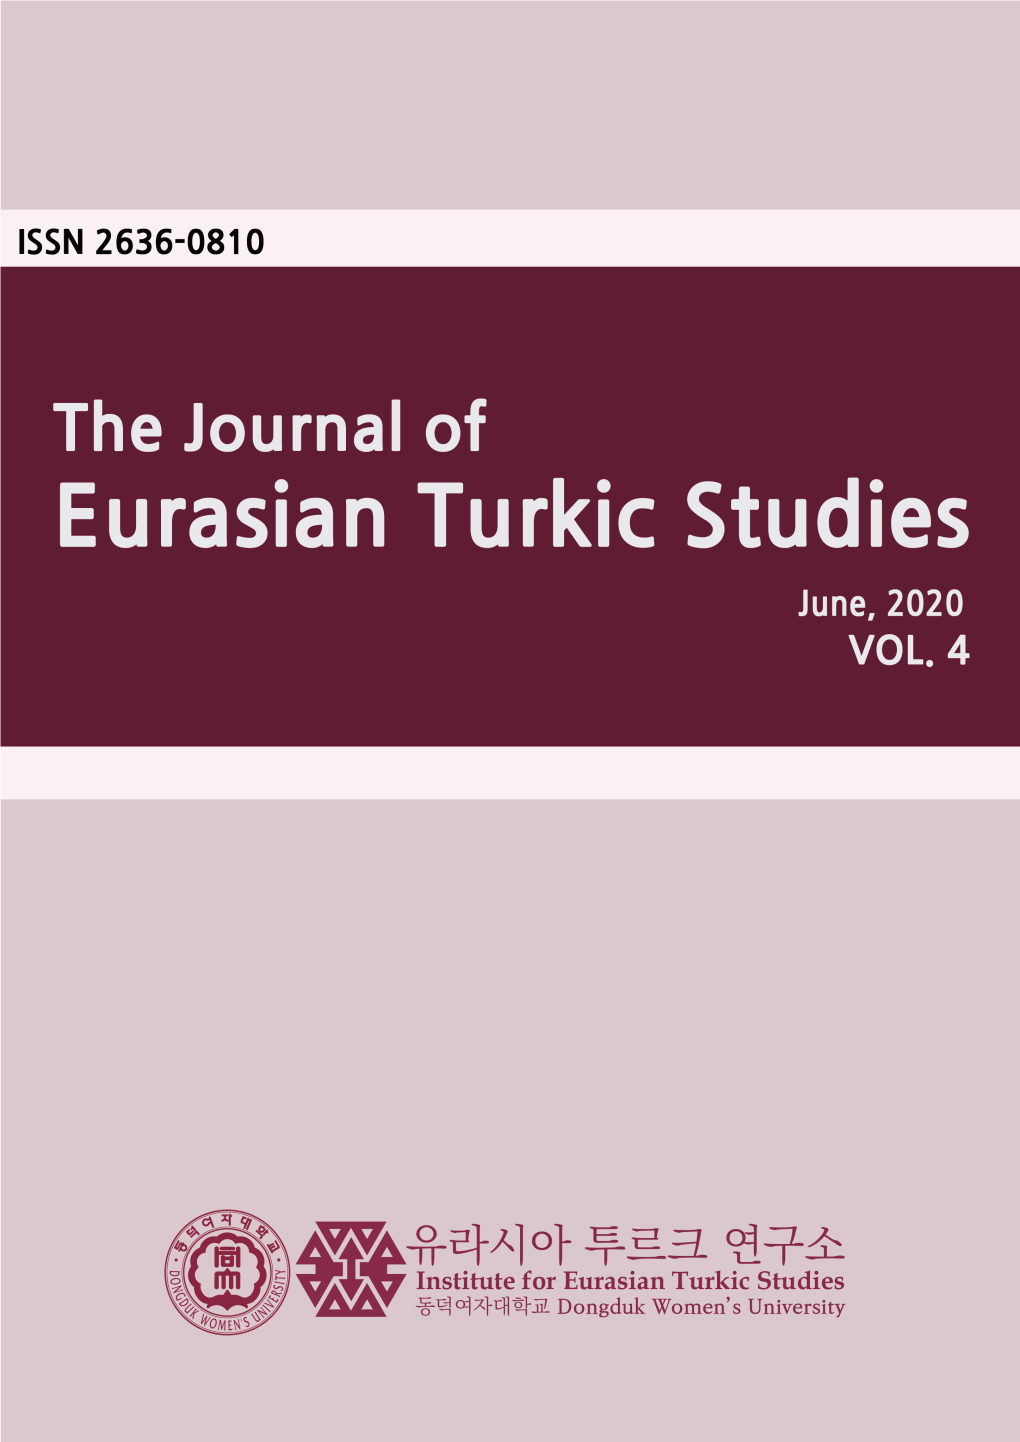 The Journal of Eurasian Turkic Studies